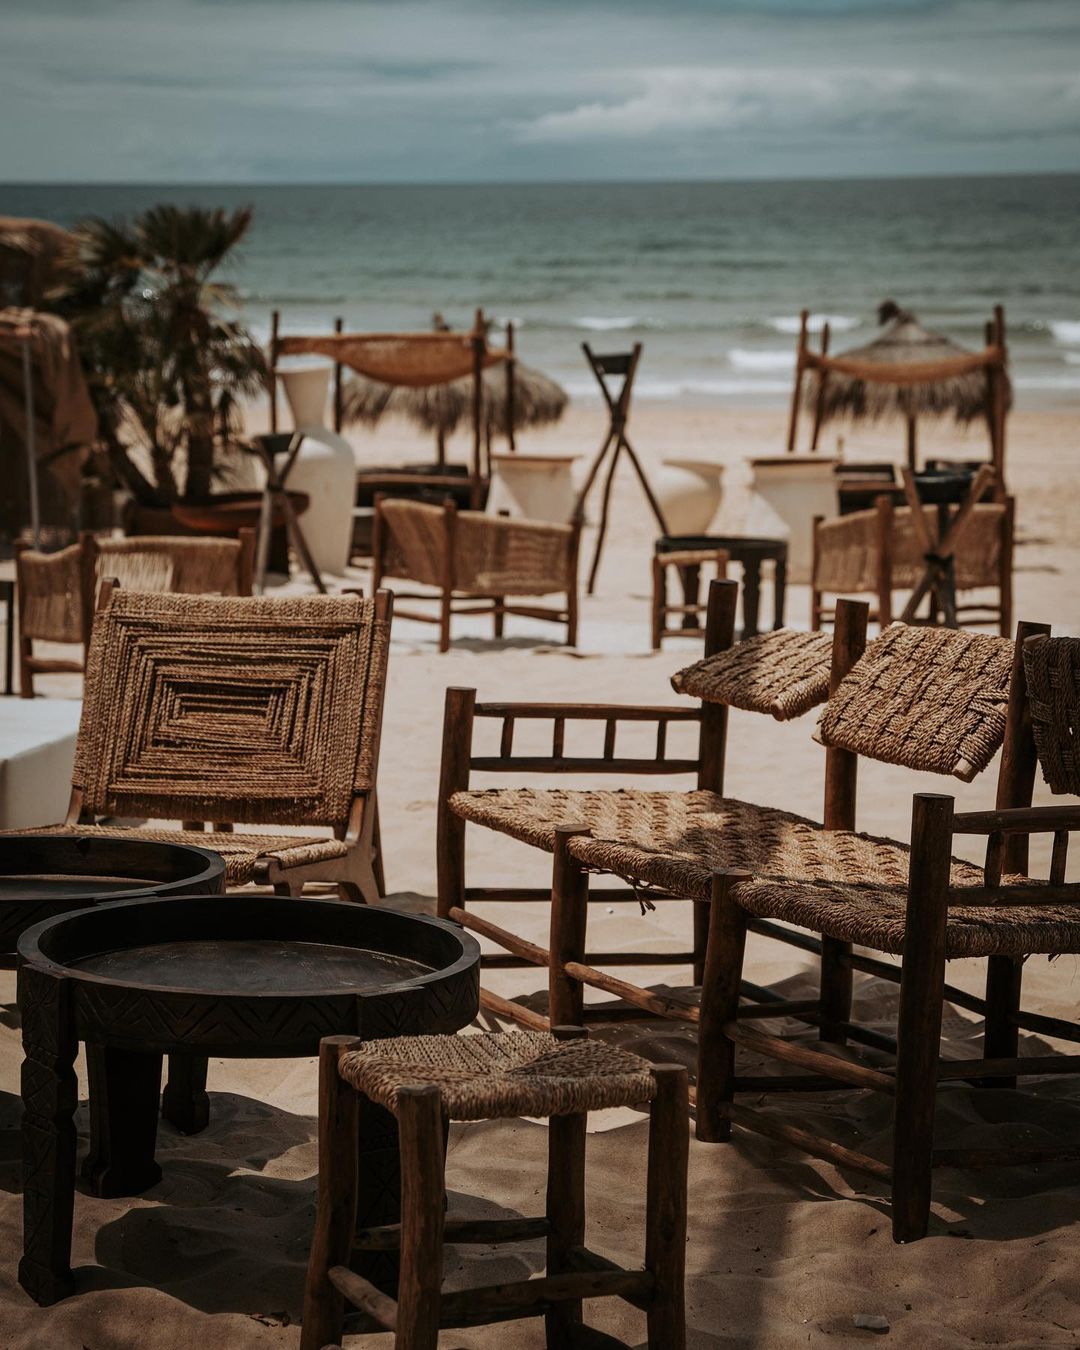 Moroccan beach furniture at Casa Reia - Best Exotic Beach Clubs in Europe